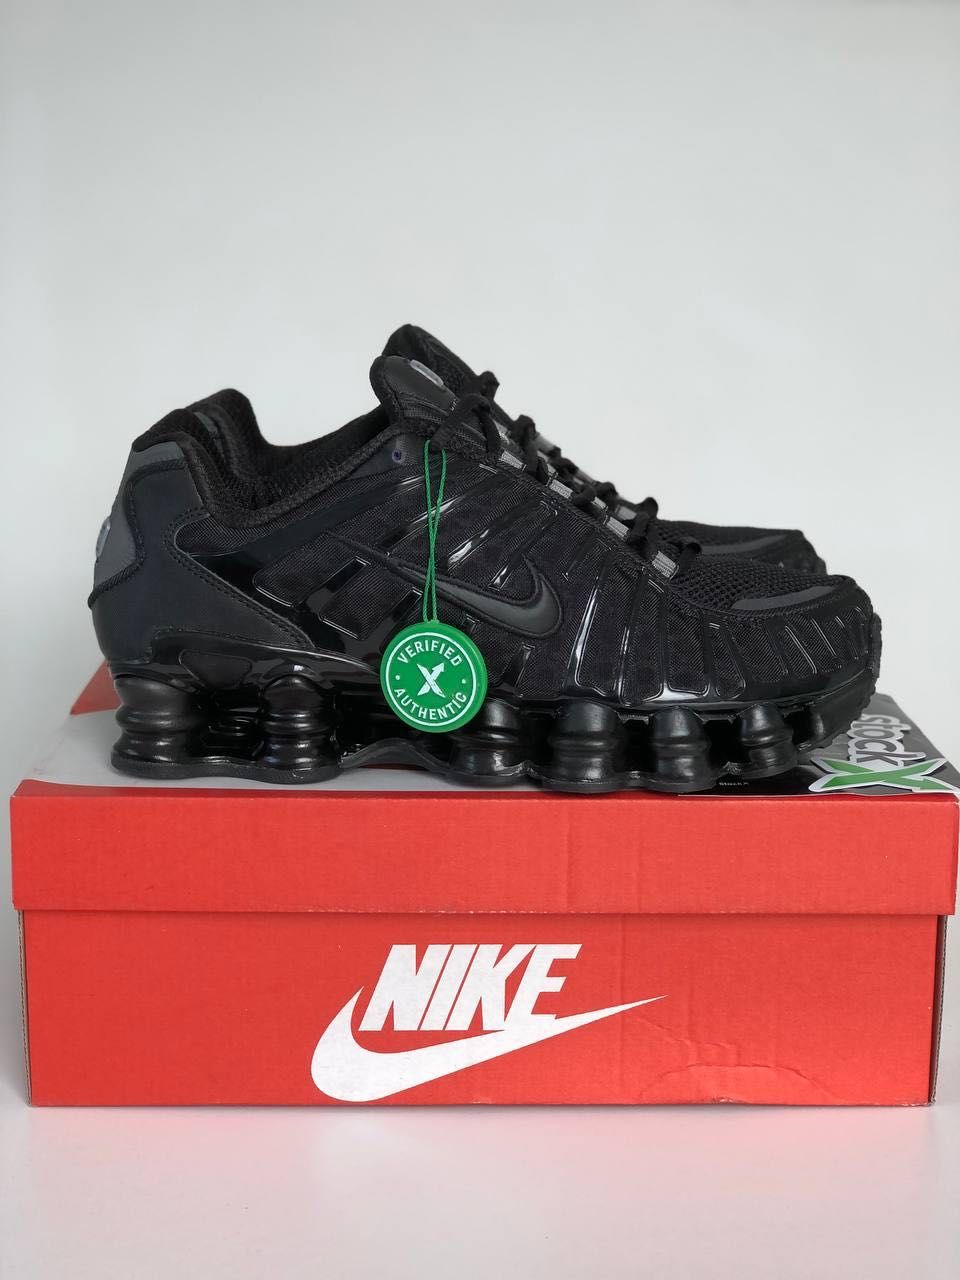 Мужские кроссовки Nike Shox LT black. Размеры 40-45